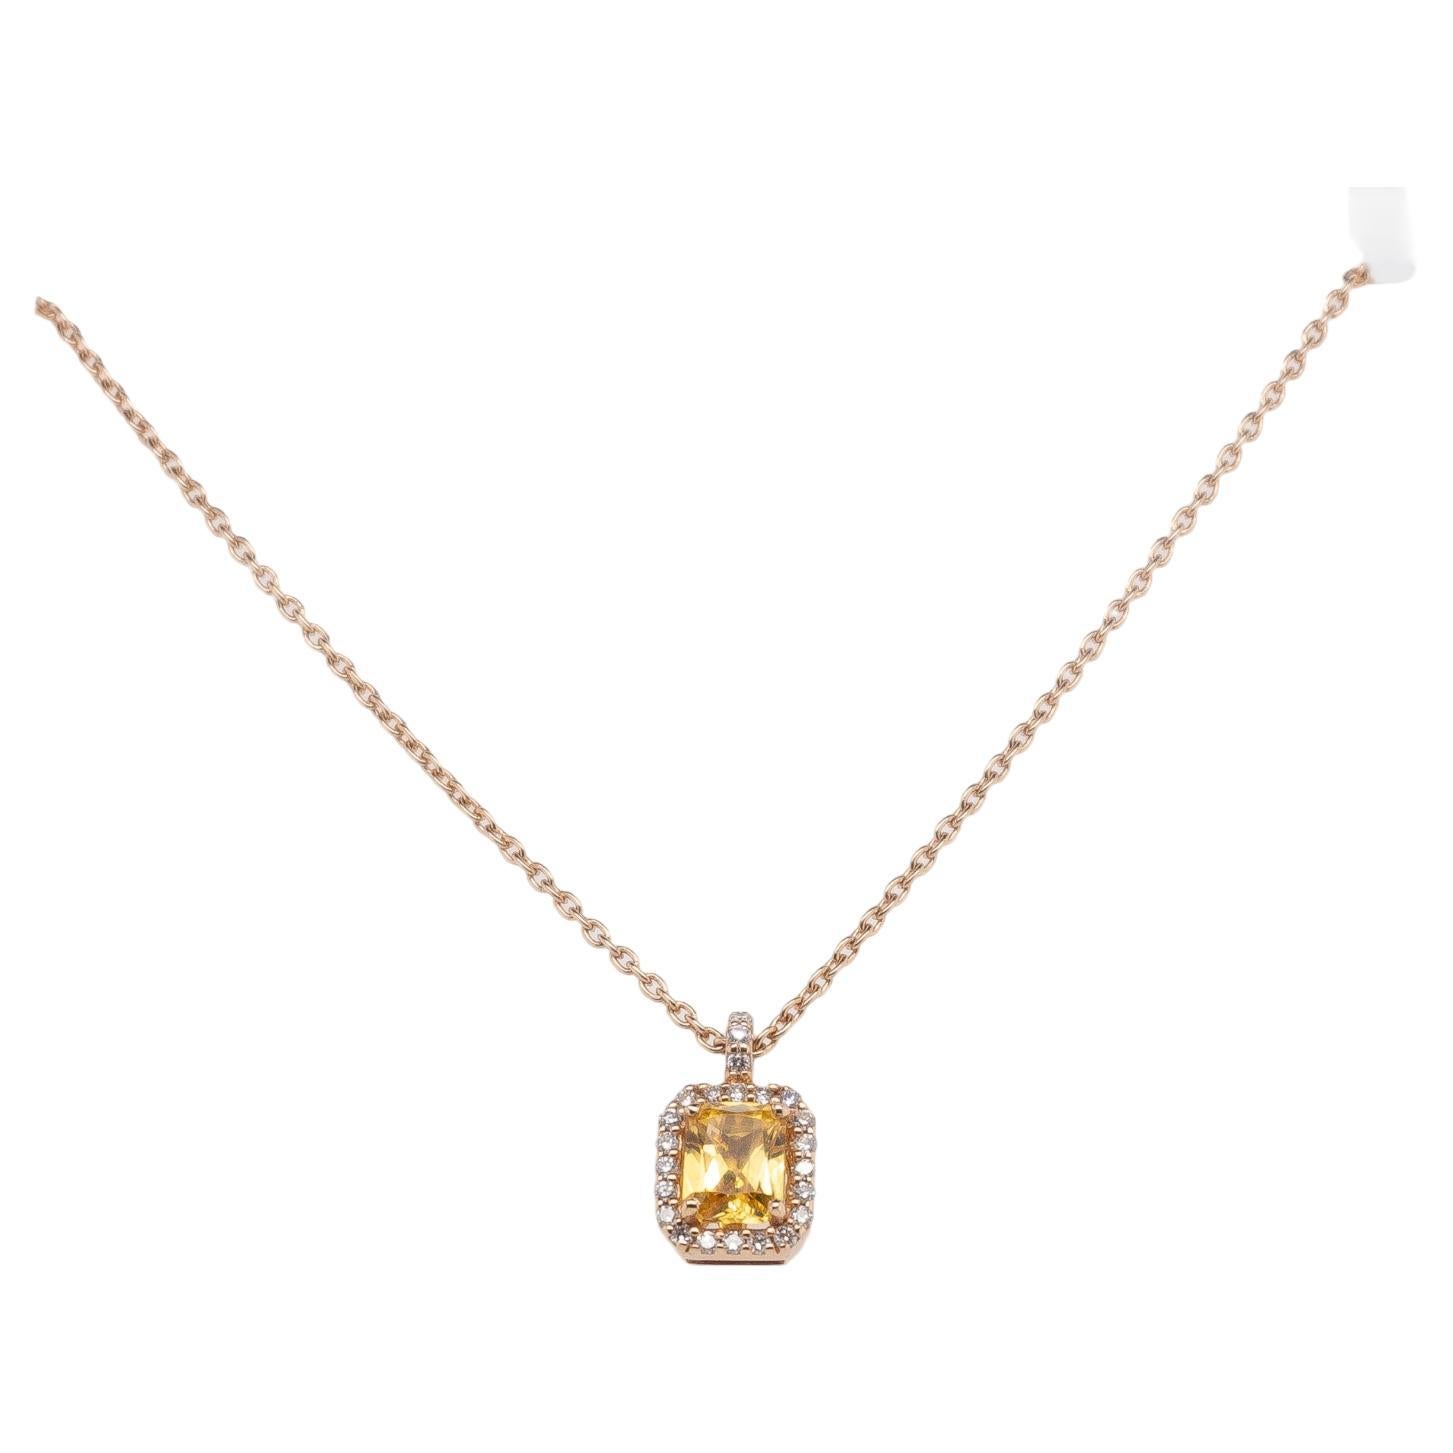 Pendentif en or rose 18 carats avec saphir jaune et diamants